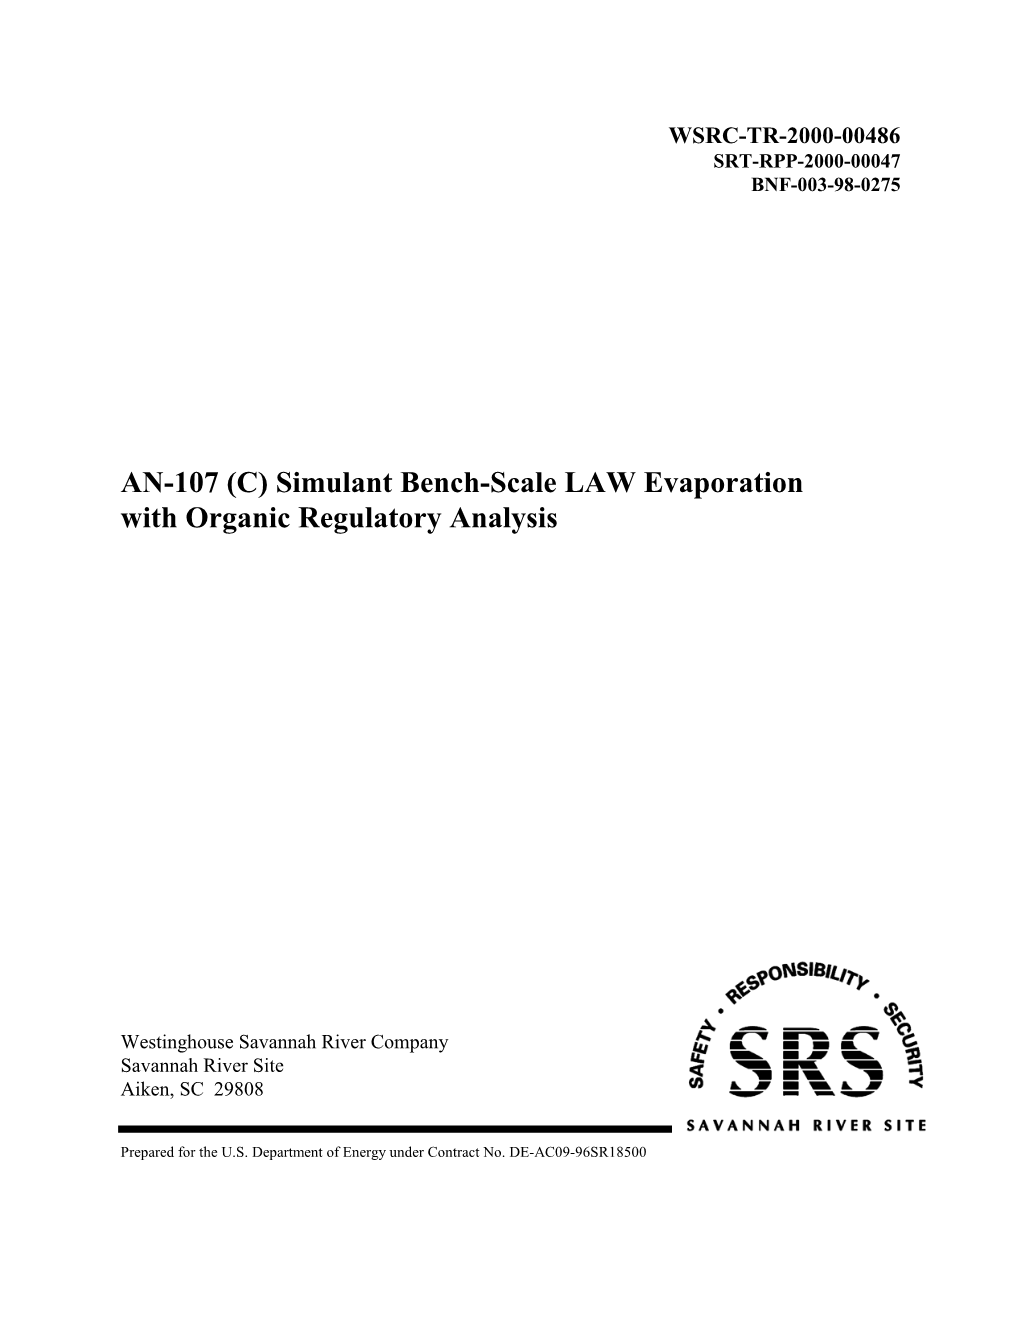 Simulant Bench-Scale LAW Evaporation with Organic Regulatory Analysis